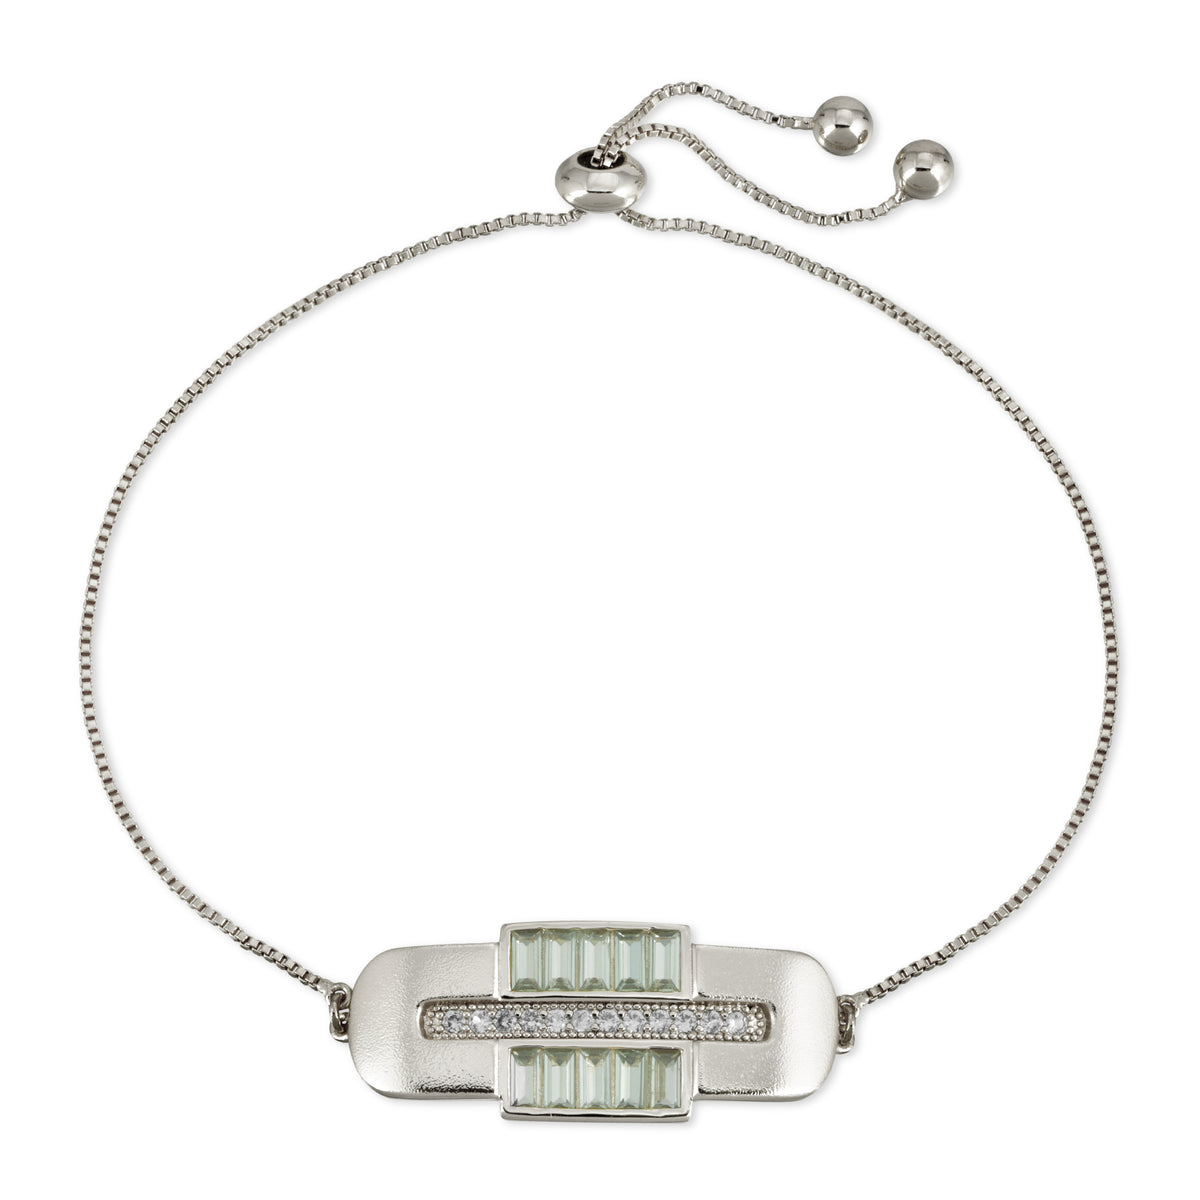 Century Chain Bracelet - Green CZ